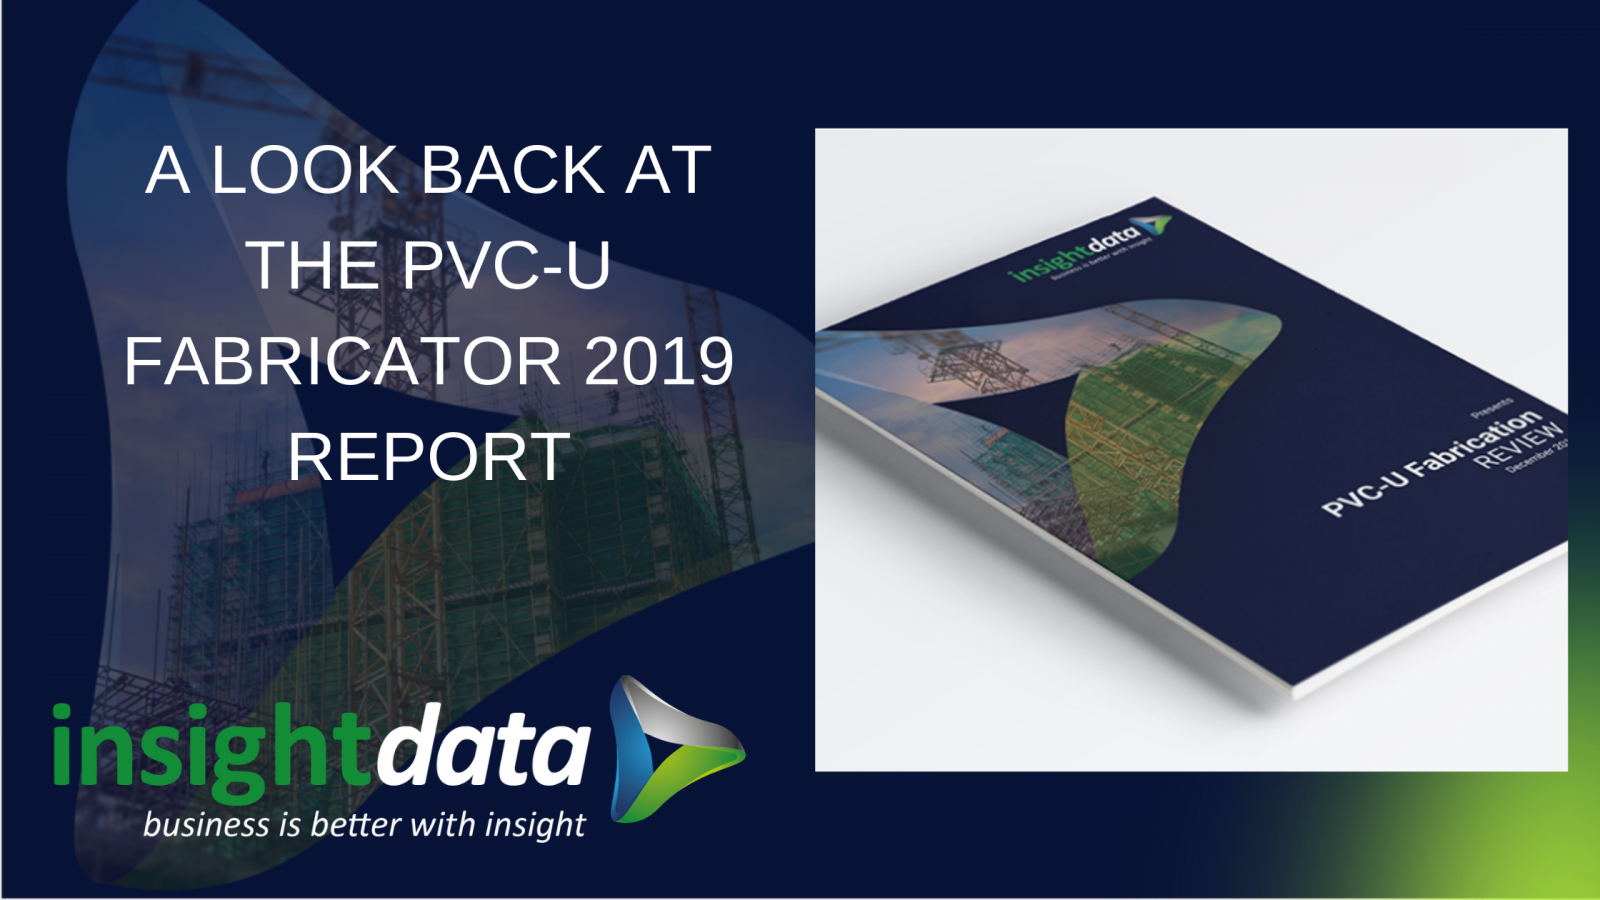 2019 PVC-U report review blog article card representing Insight Data